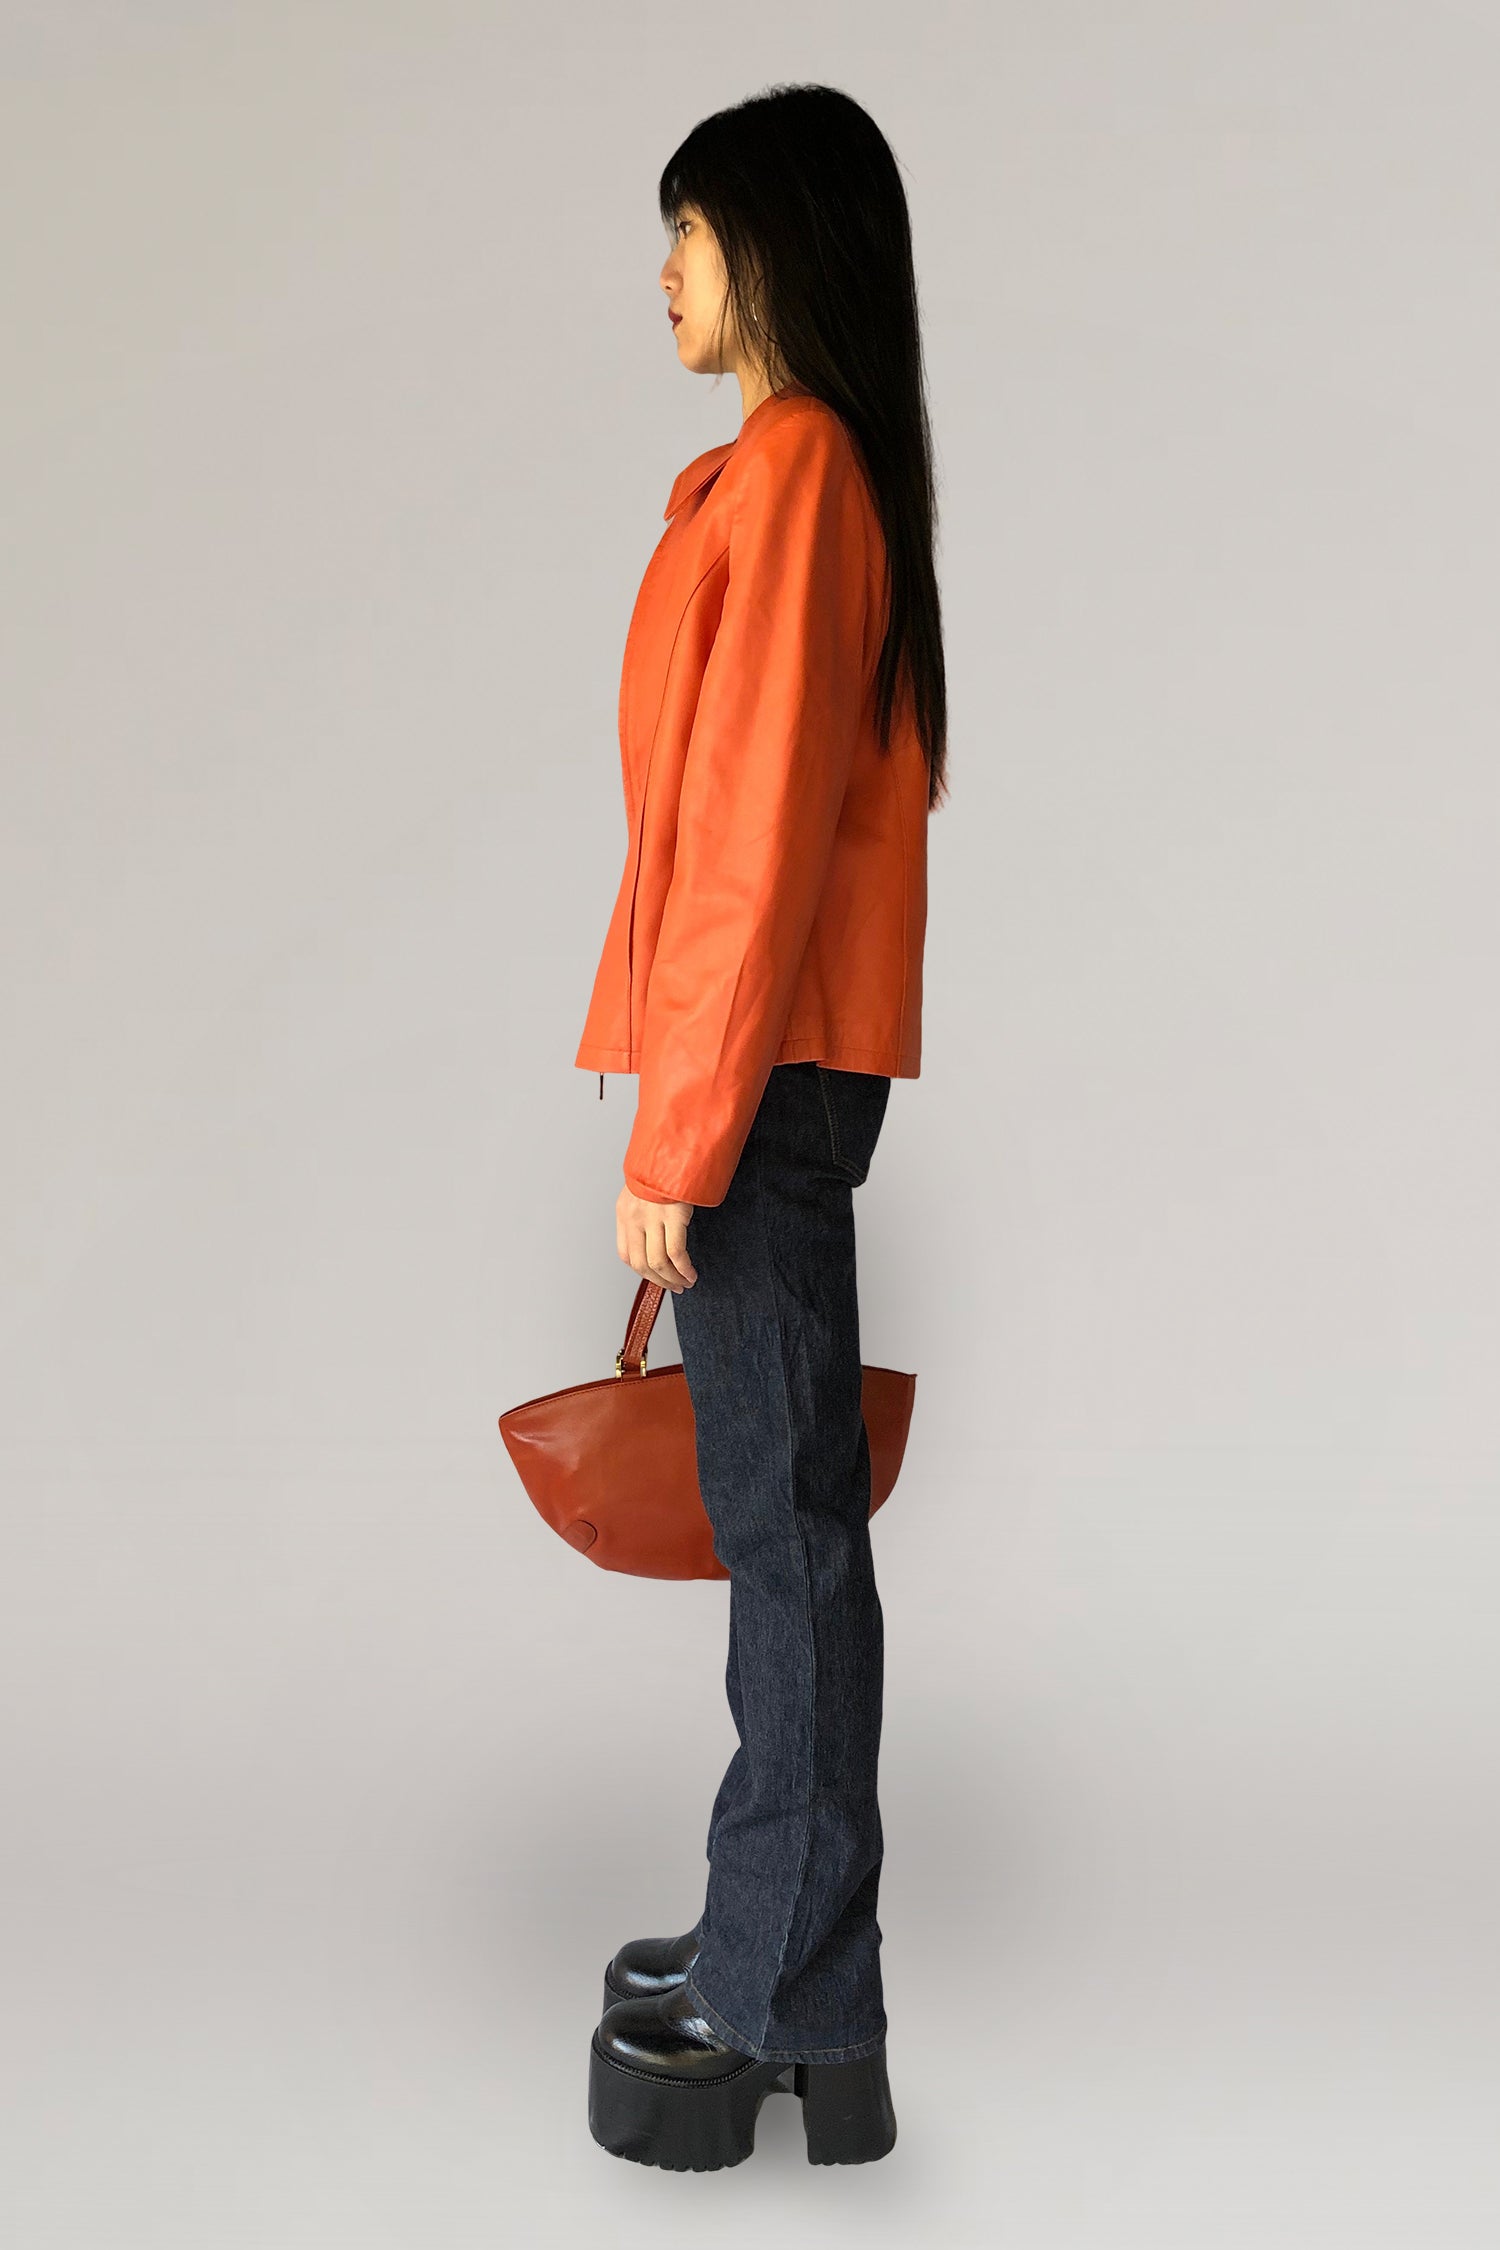 Orange leatherjacket - PICKNWEIGHT - VINTAGE KILO STORE